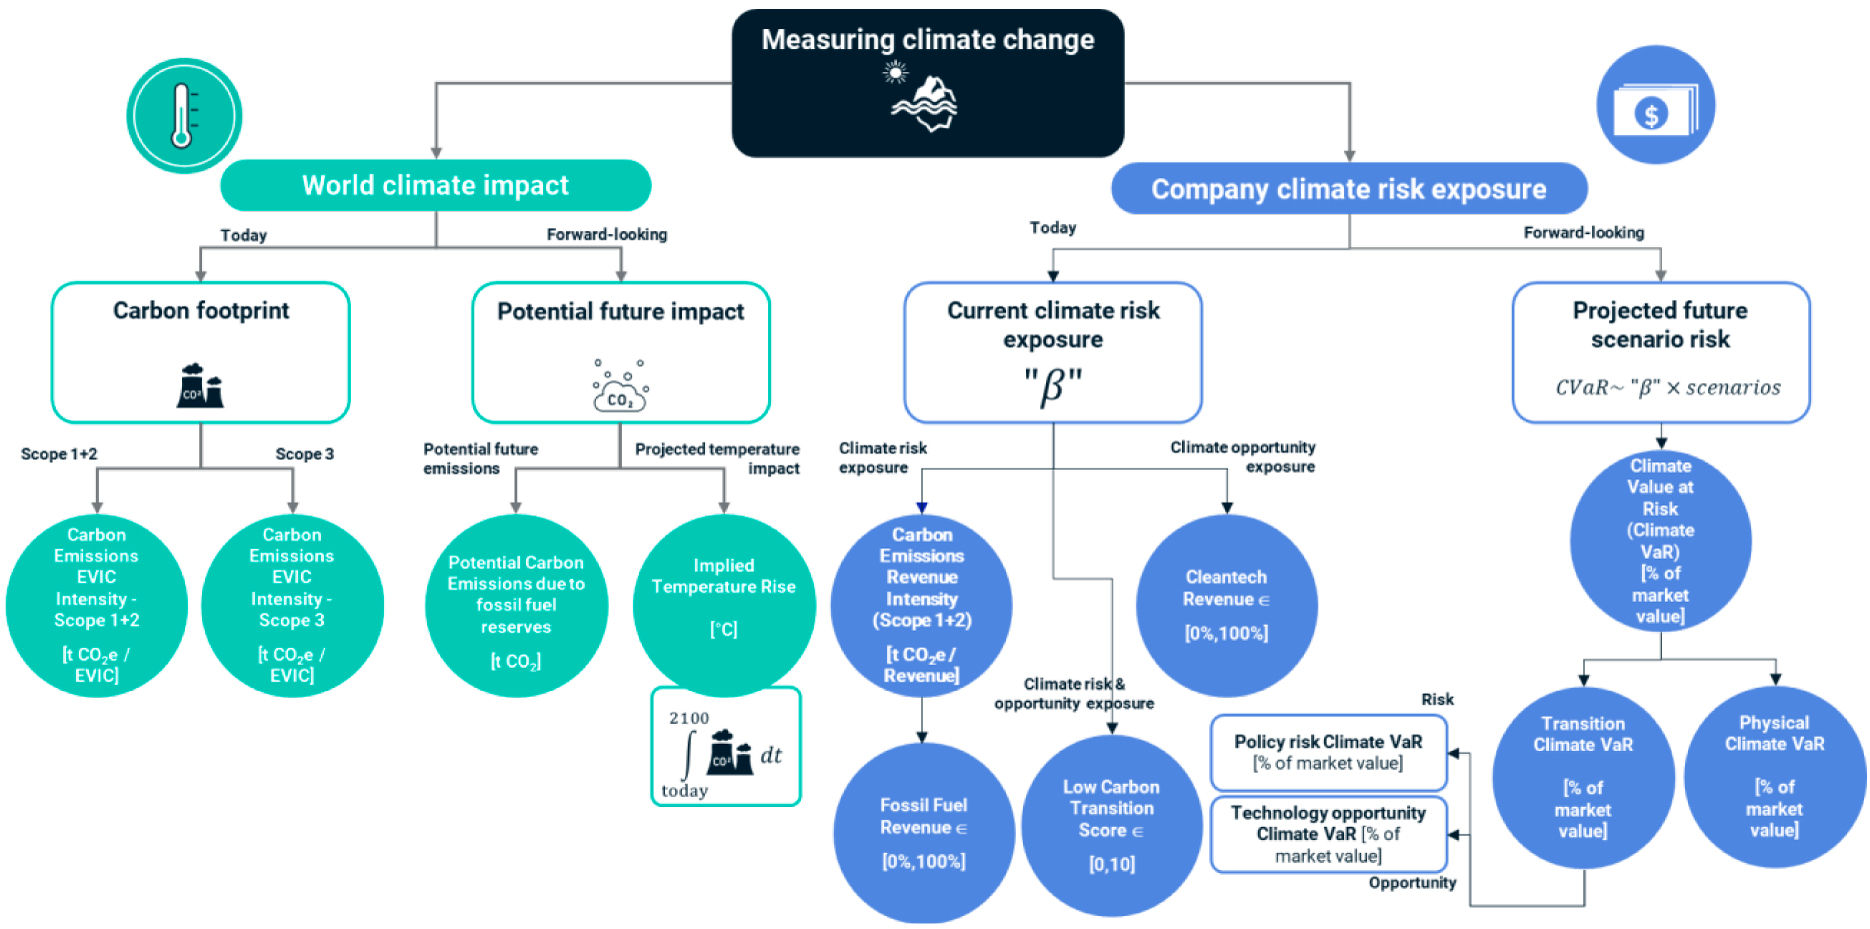 This exhibit details MSCI’s climate impact vs. climate metrics decision-tree